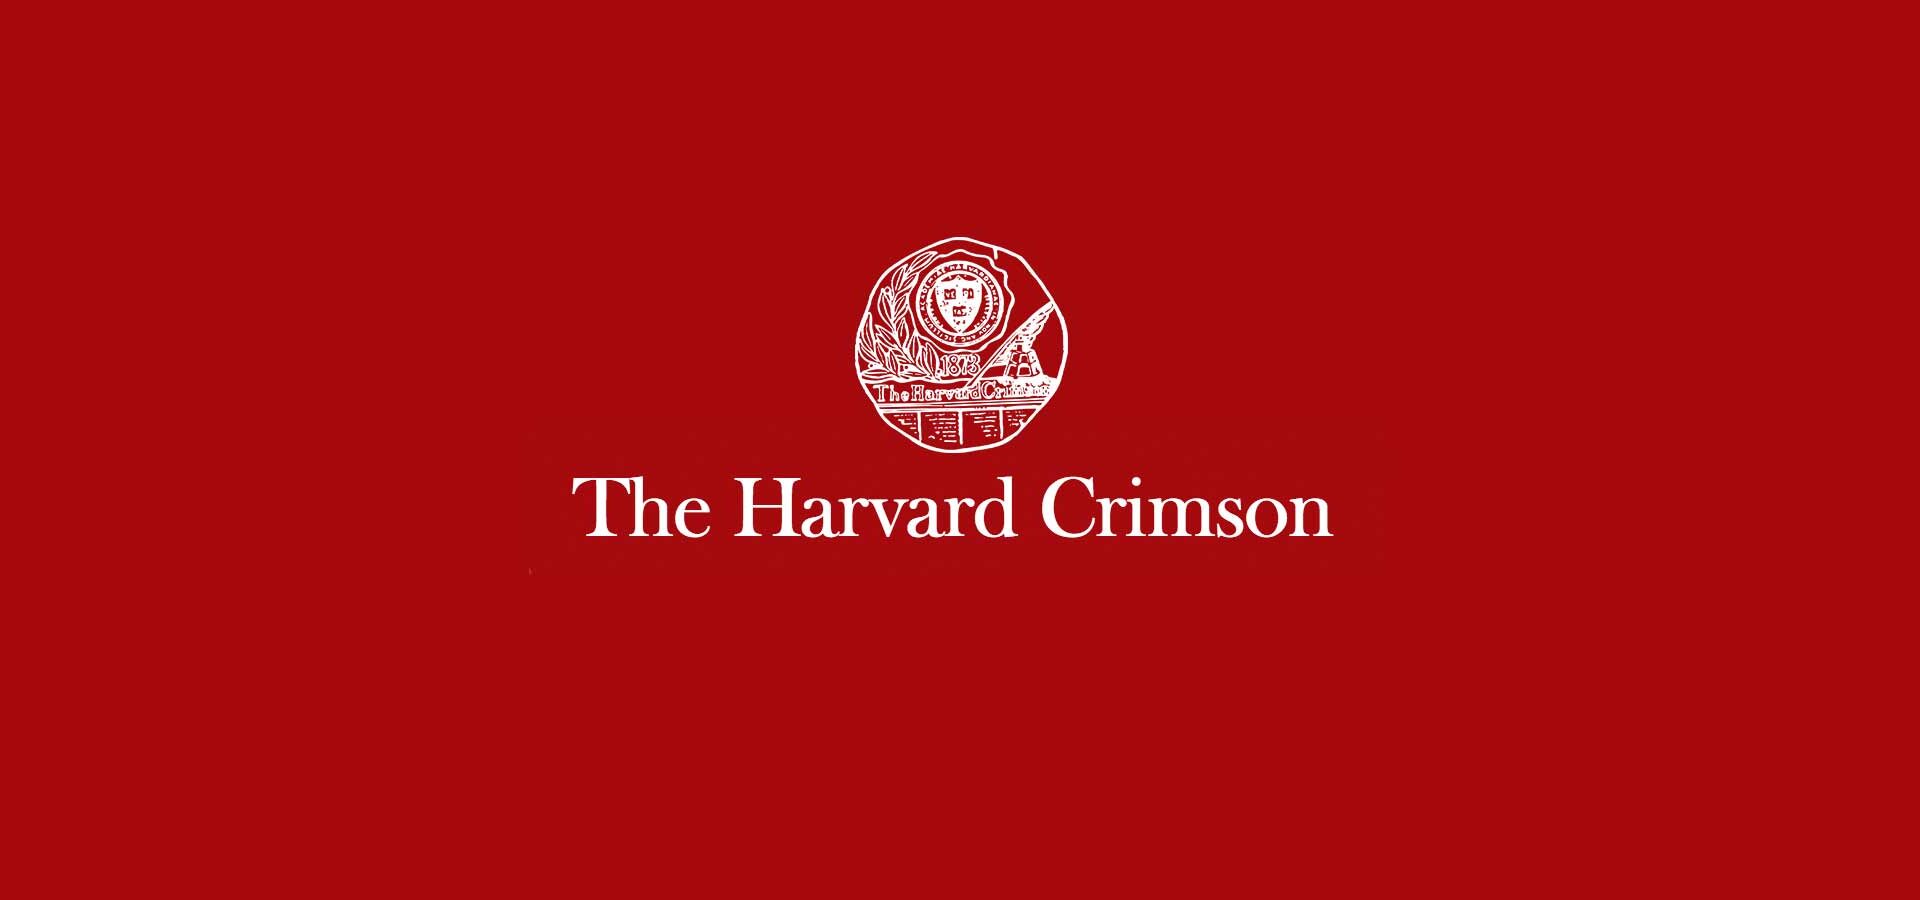 The Harvard Crimson logo